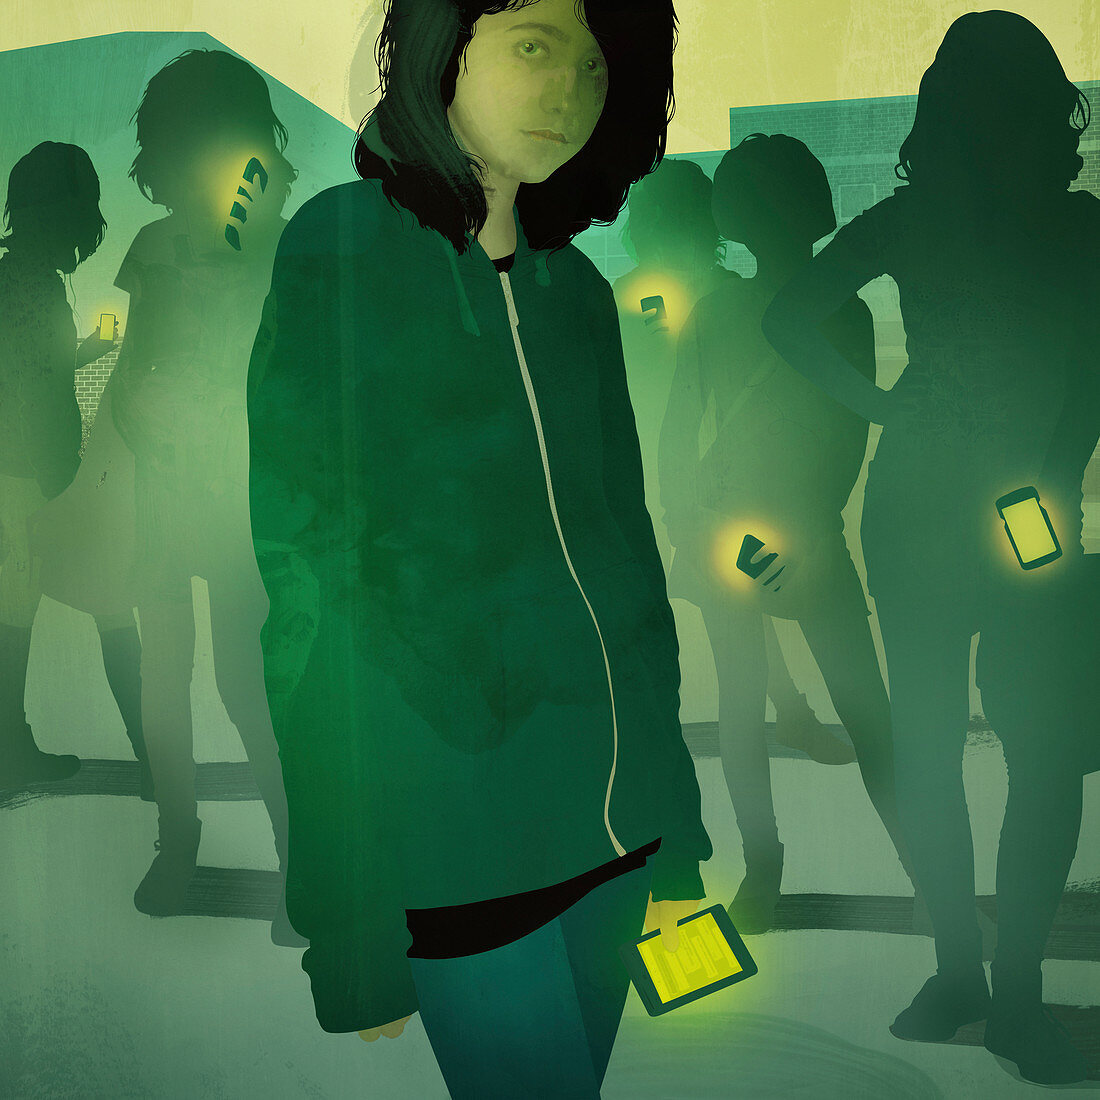 Teenage girls with smart phones, illustration